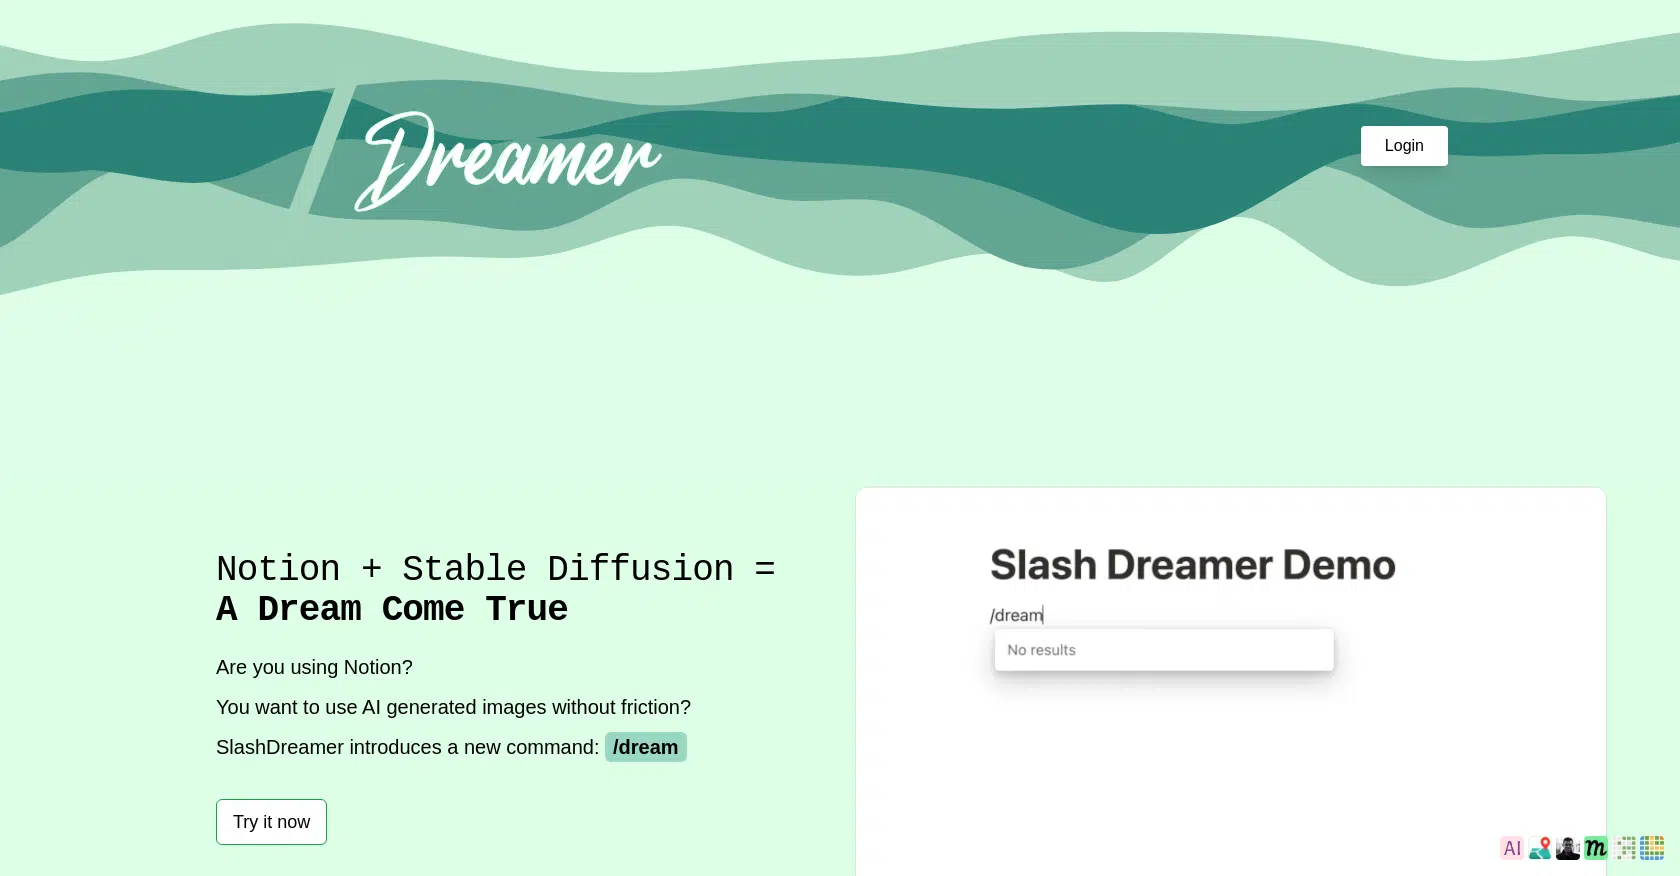 Dreamerwebsite picture